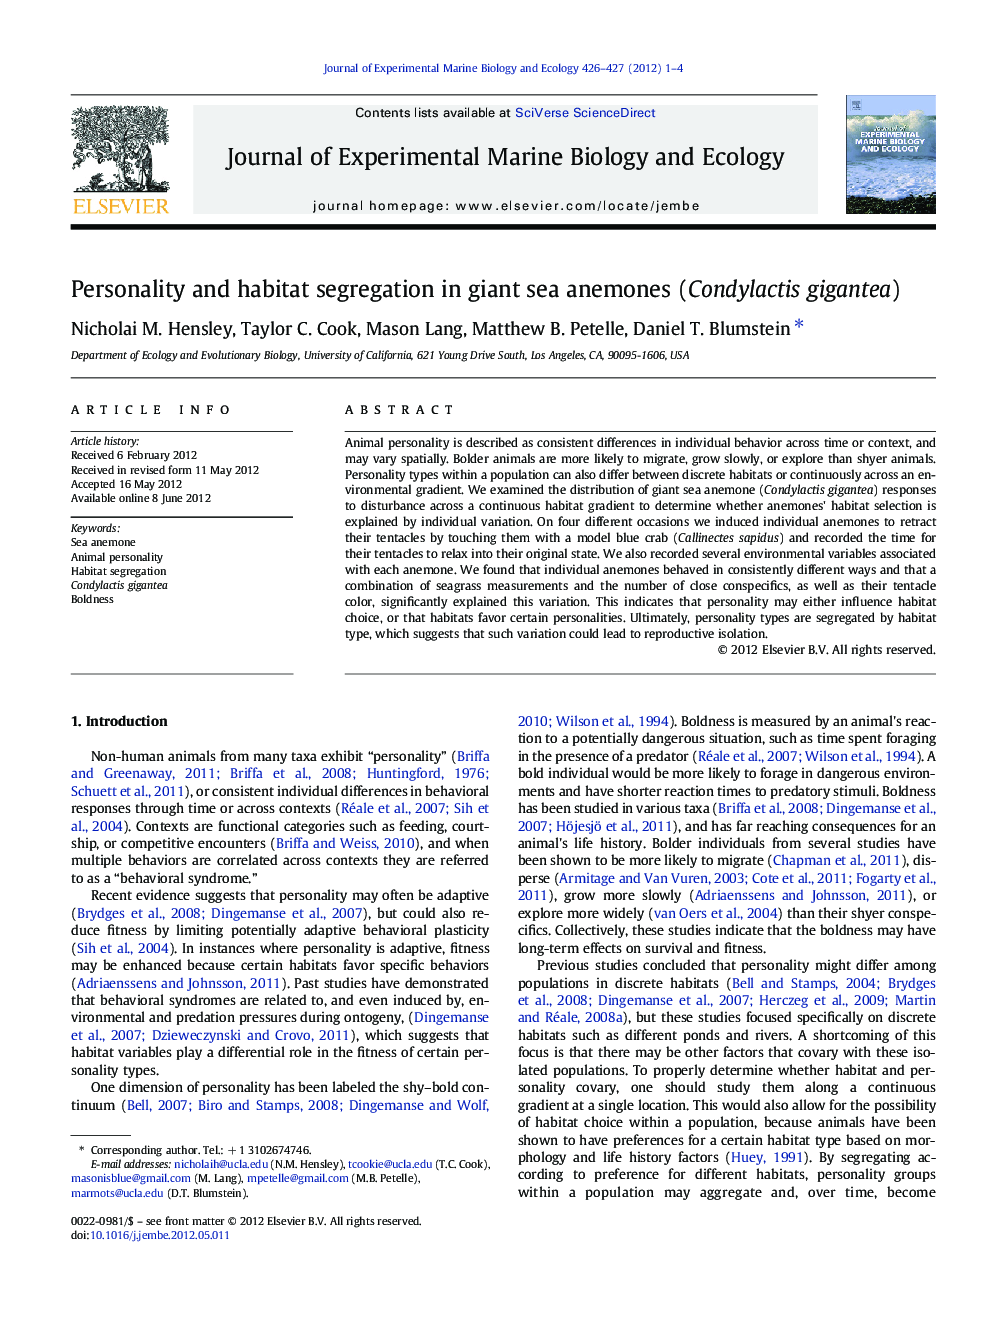 Personality and habitat segregation in giant sea anemones (Condylactis gigantea)